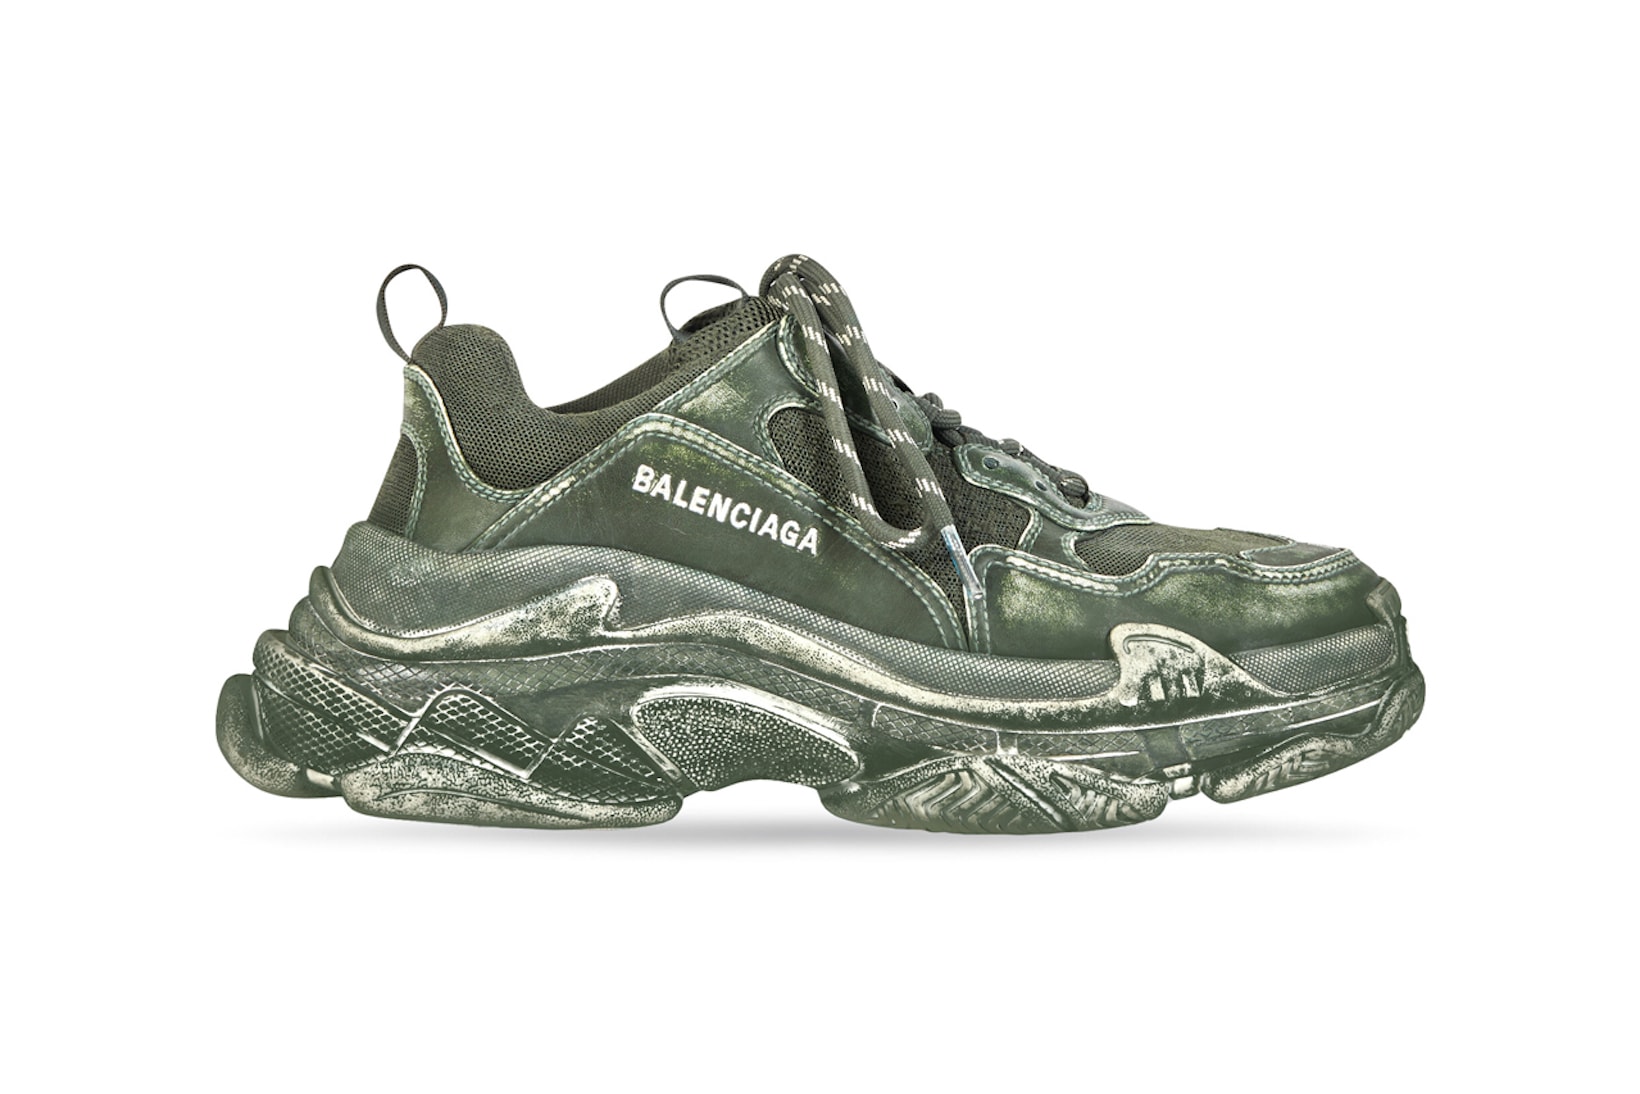 Balenciaga Triple S Sneakers Footwear Shoes Kicks Sneakerhead Faded Colorways Olive Green